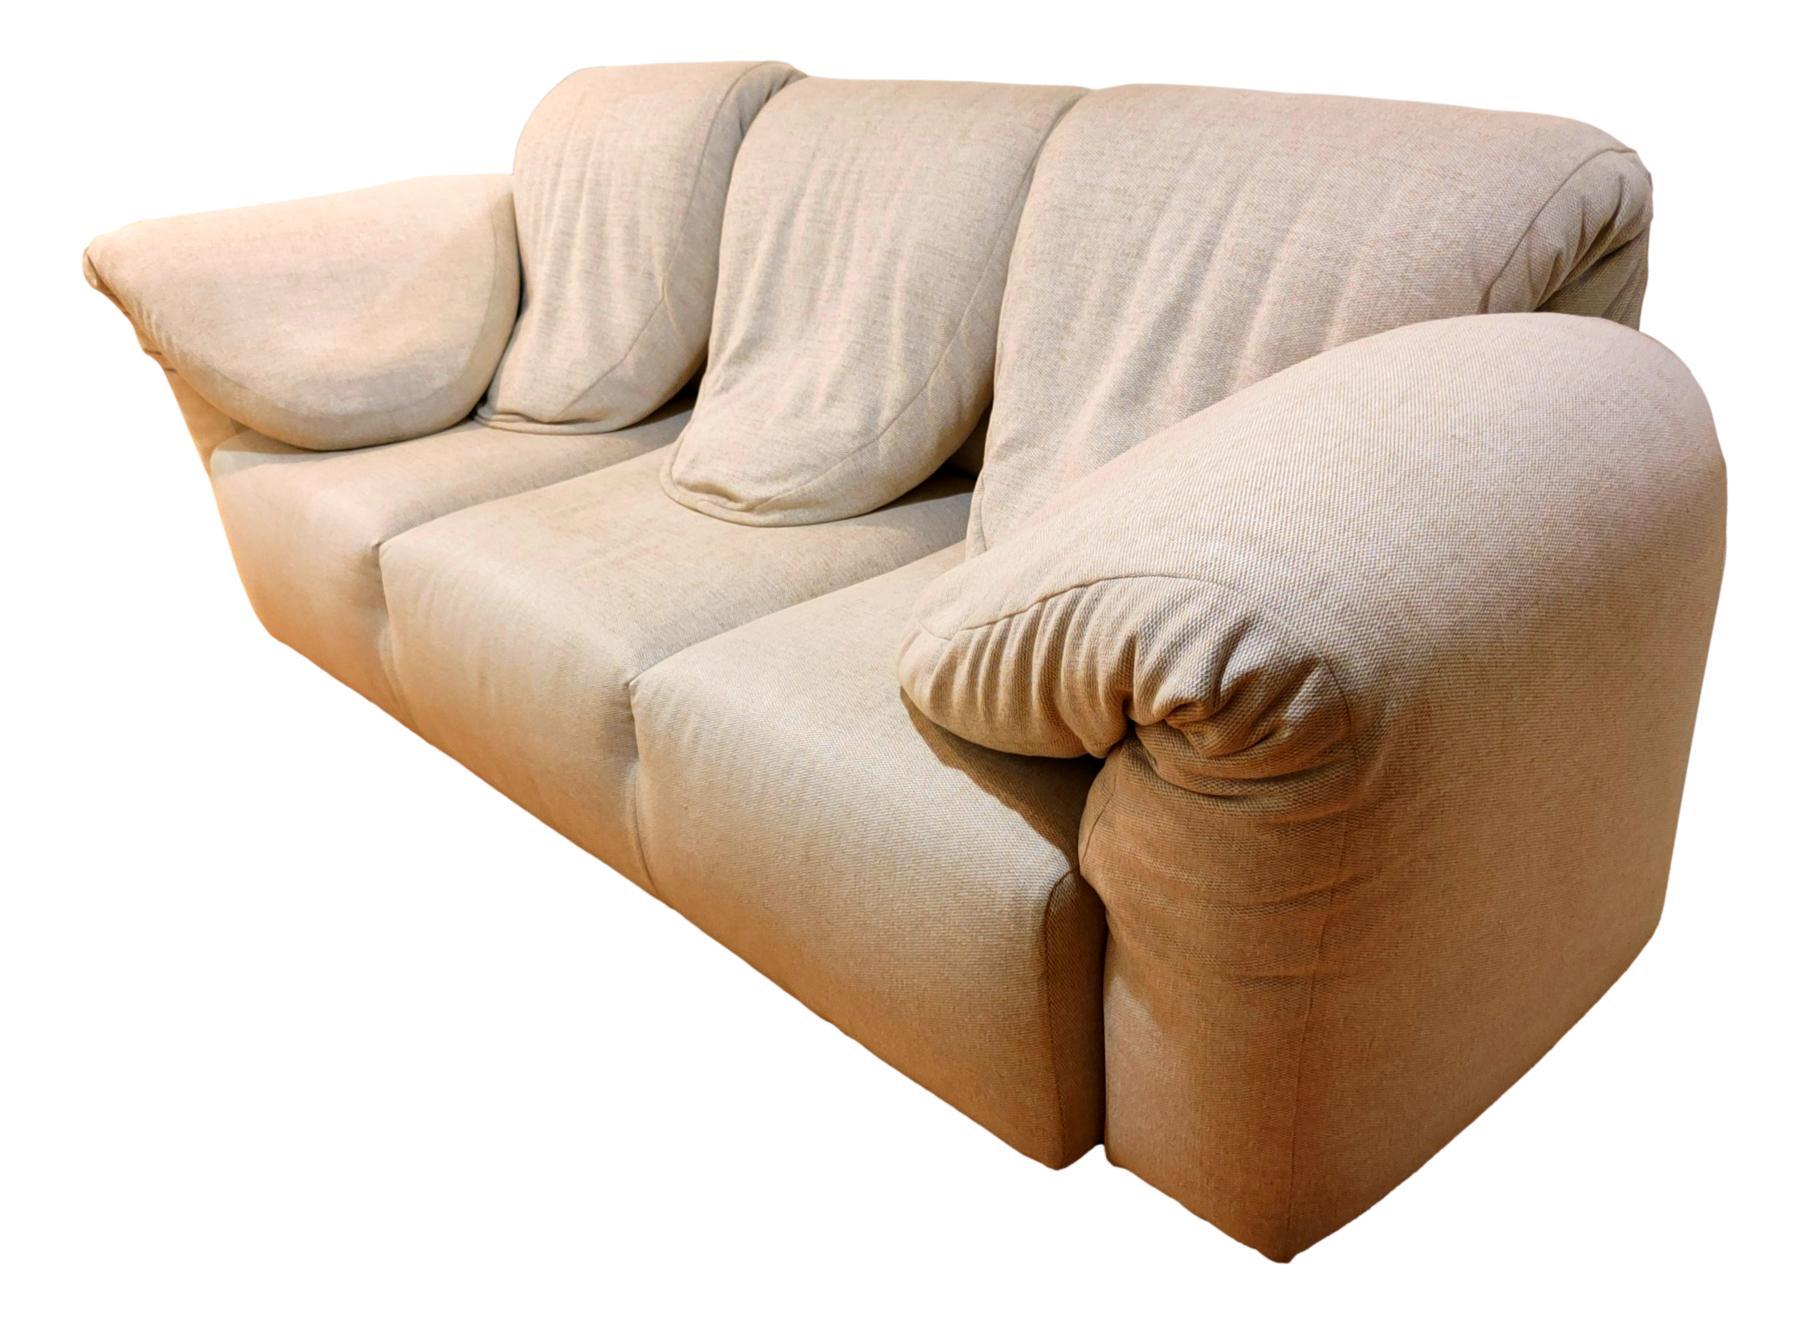 Wonderful and rare sofa 